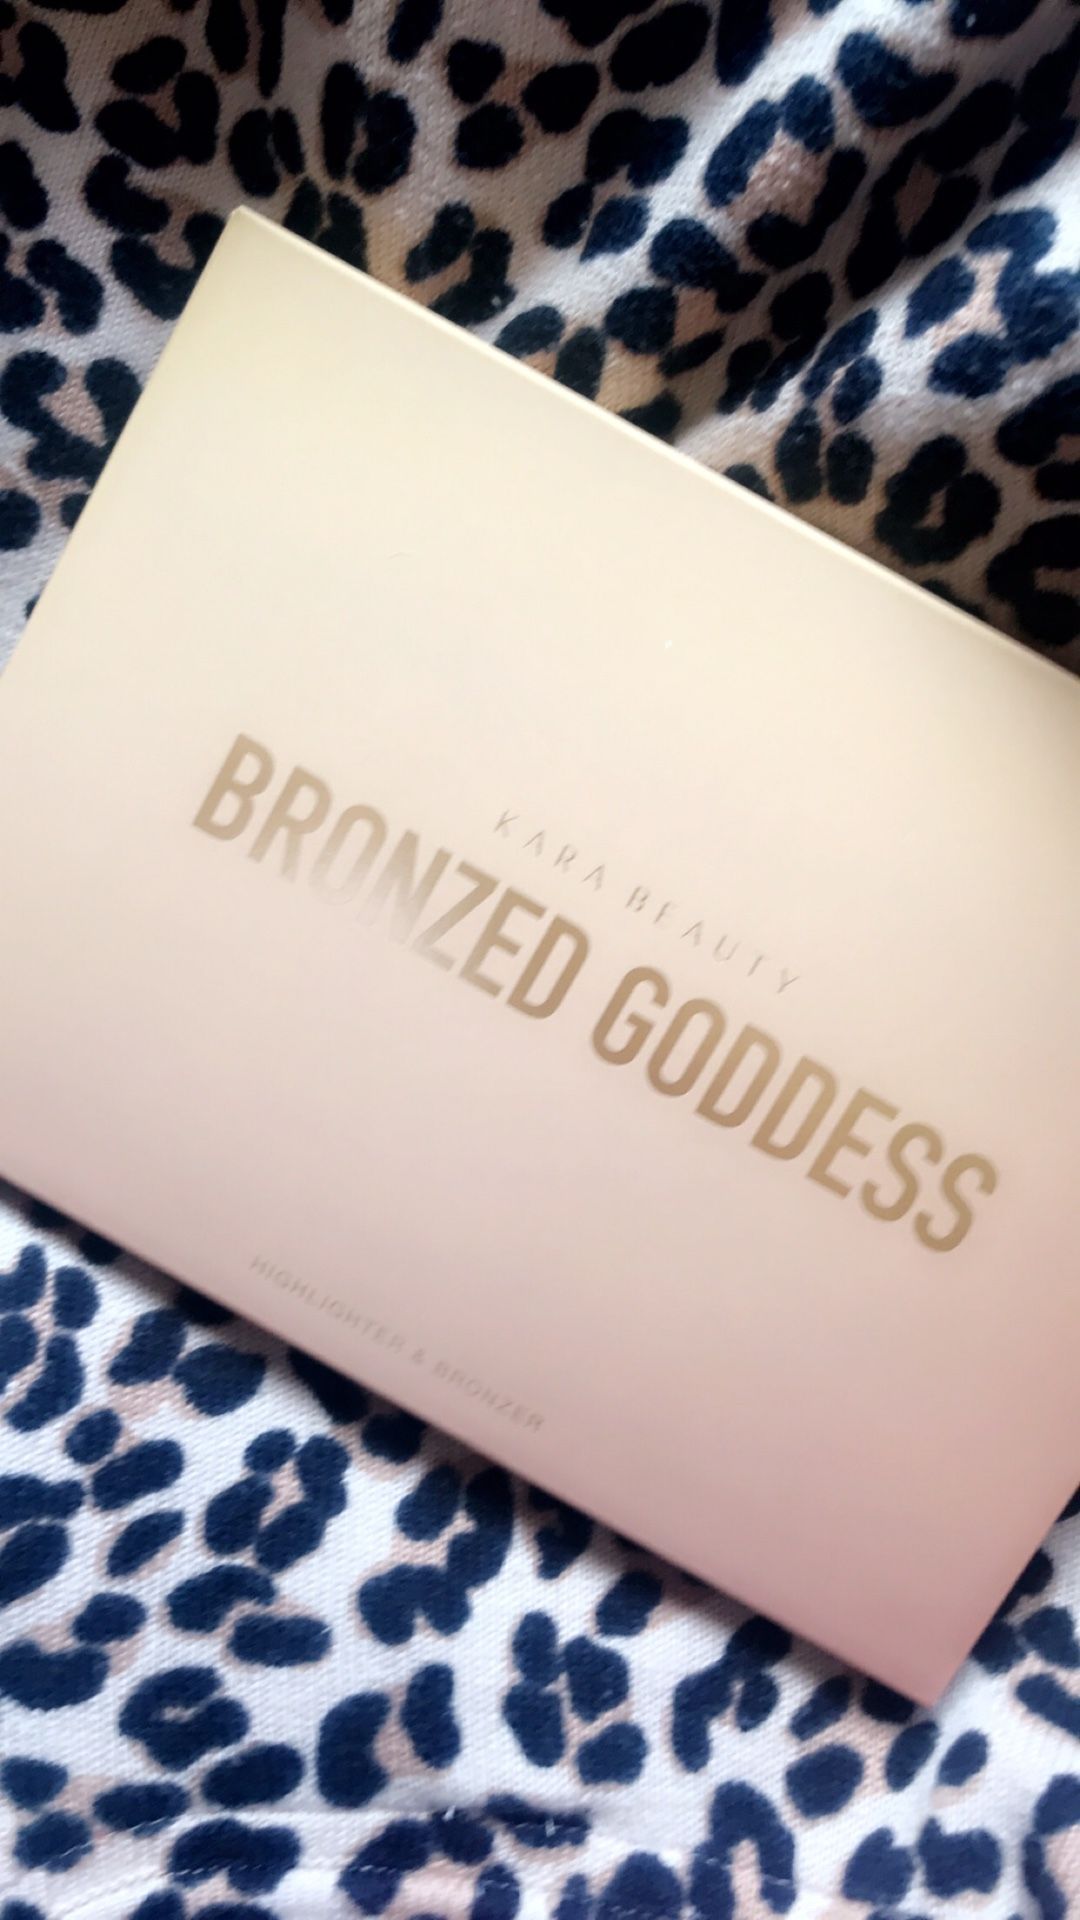 Kara Beauty bronzed godness